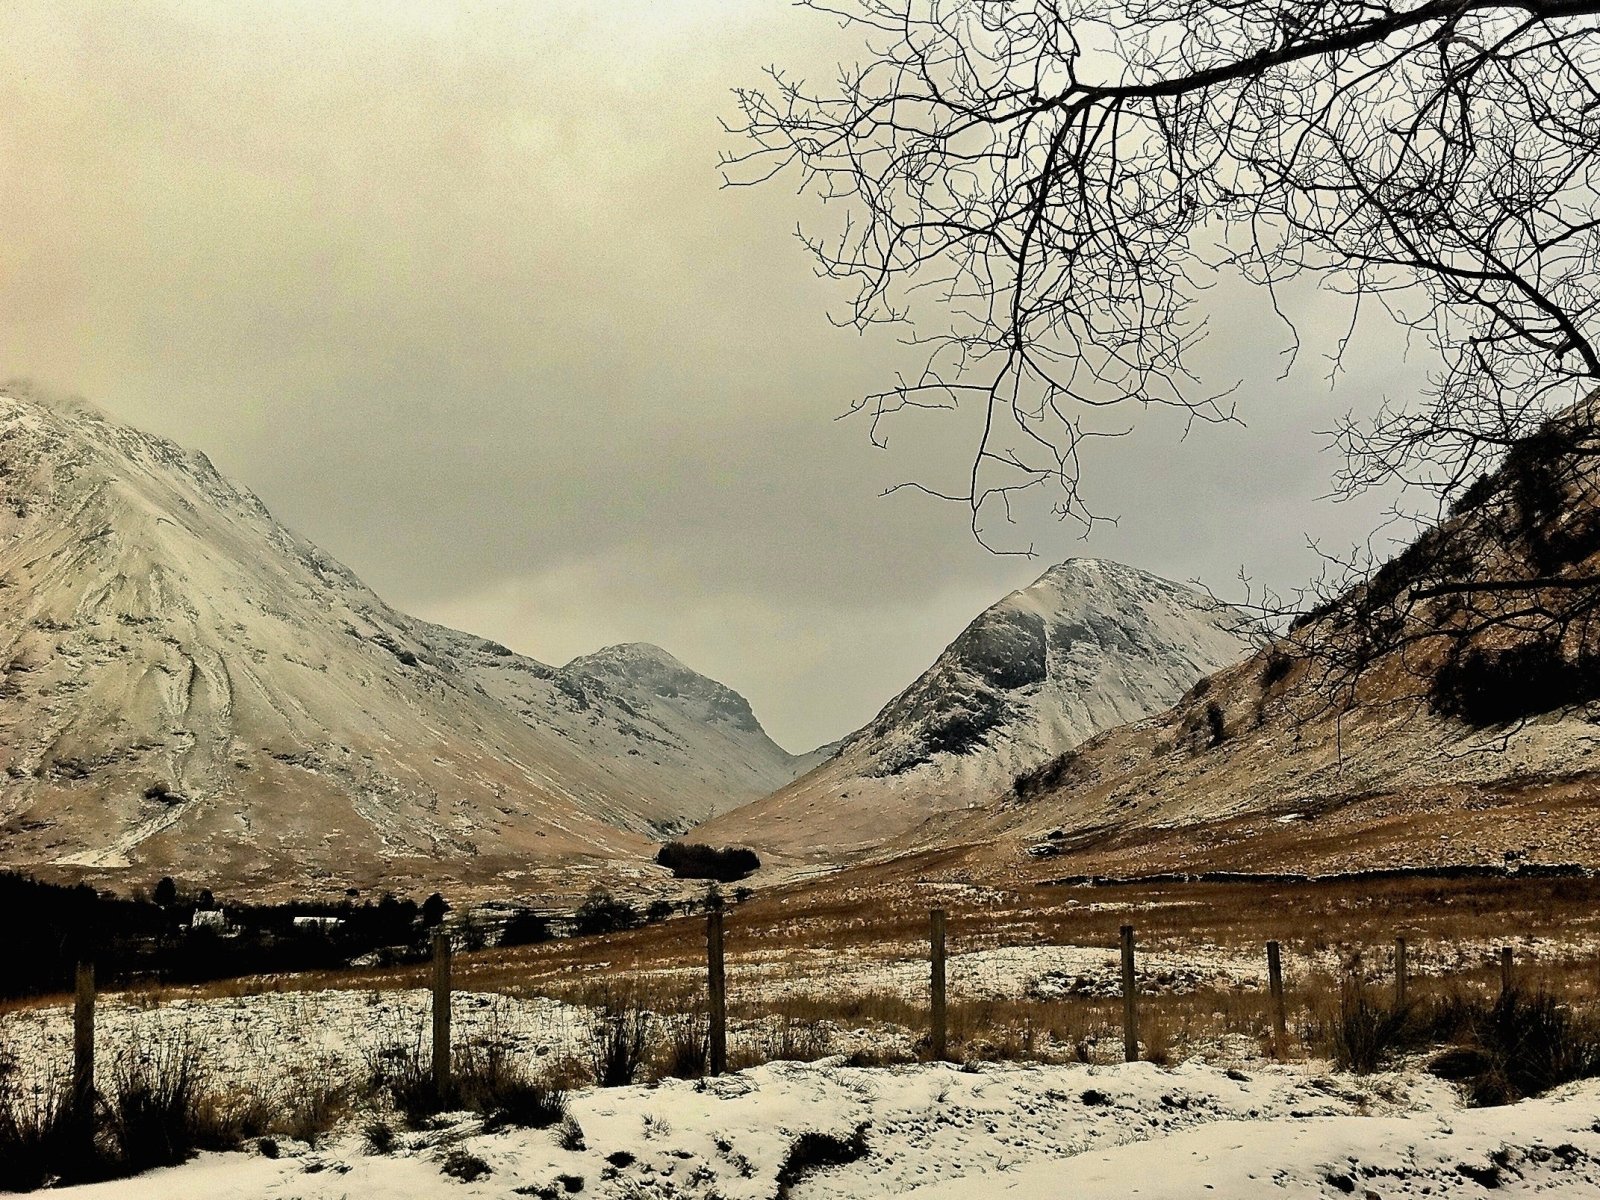 Winter In Glencoe Scottish Landscape Photography-Scottish Landscape Photography-Glencoe Art Gallery-Paintings, Prints, Homeware, Art Gifts From Scotland By Scottish Artist Kevin Hunter